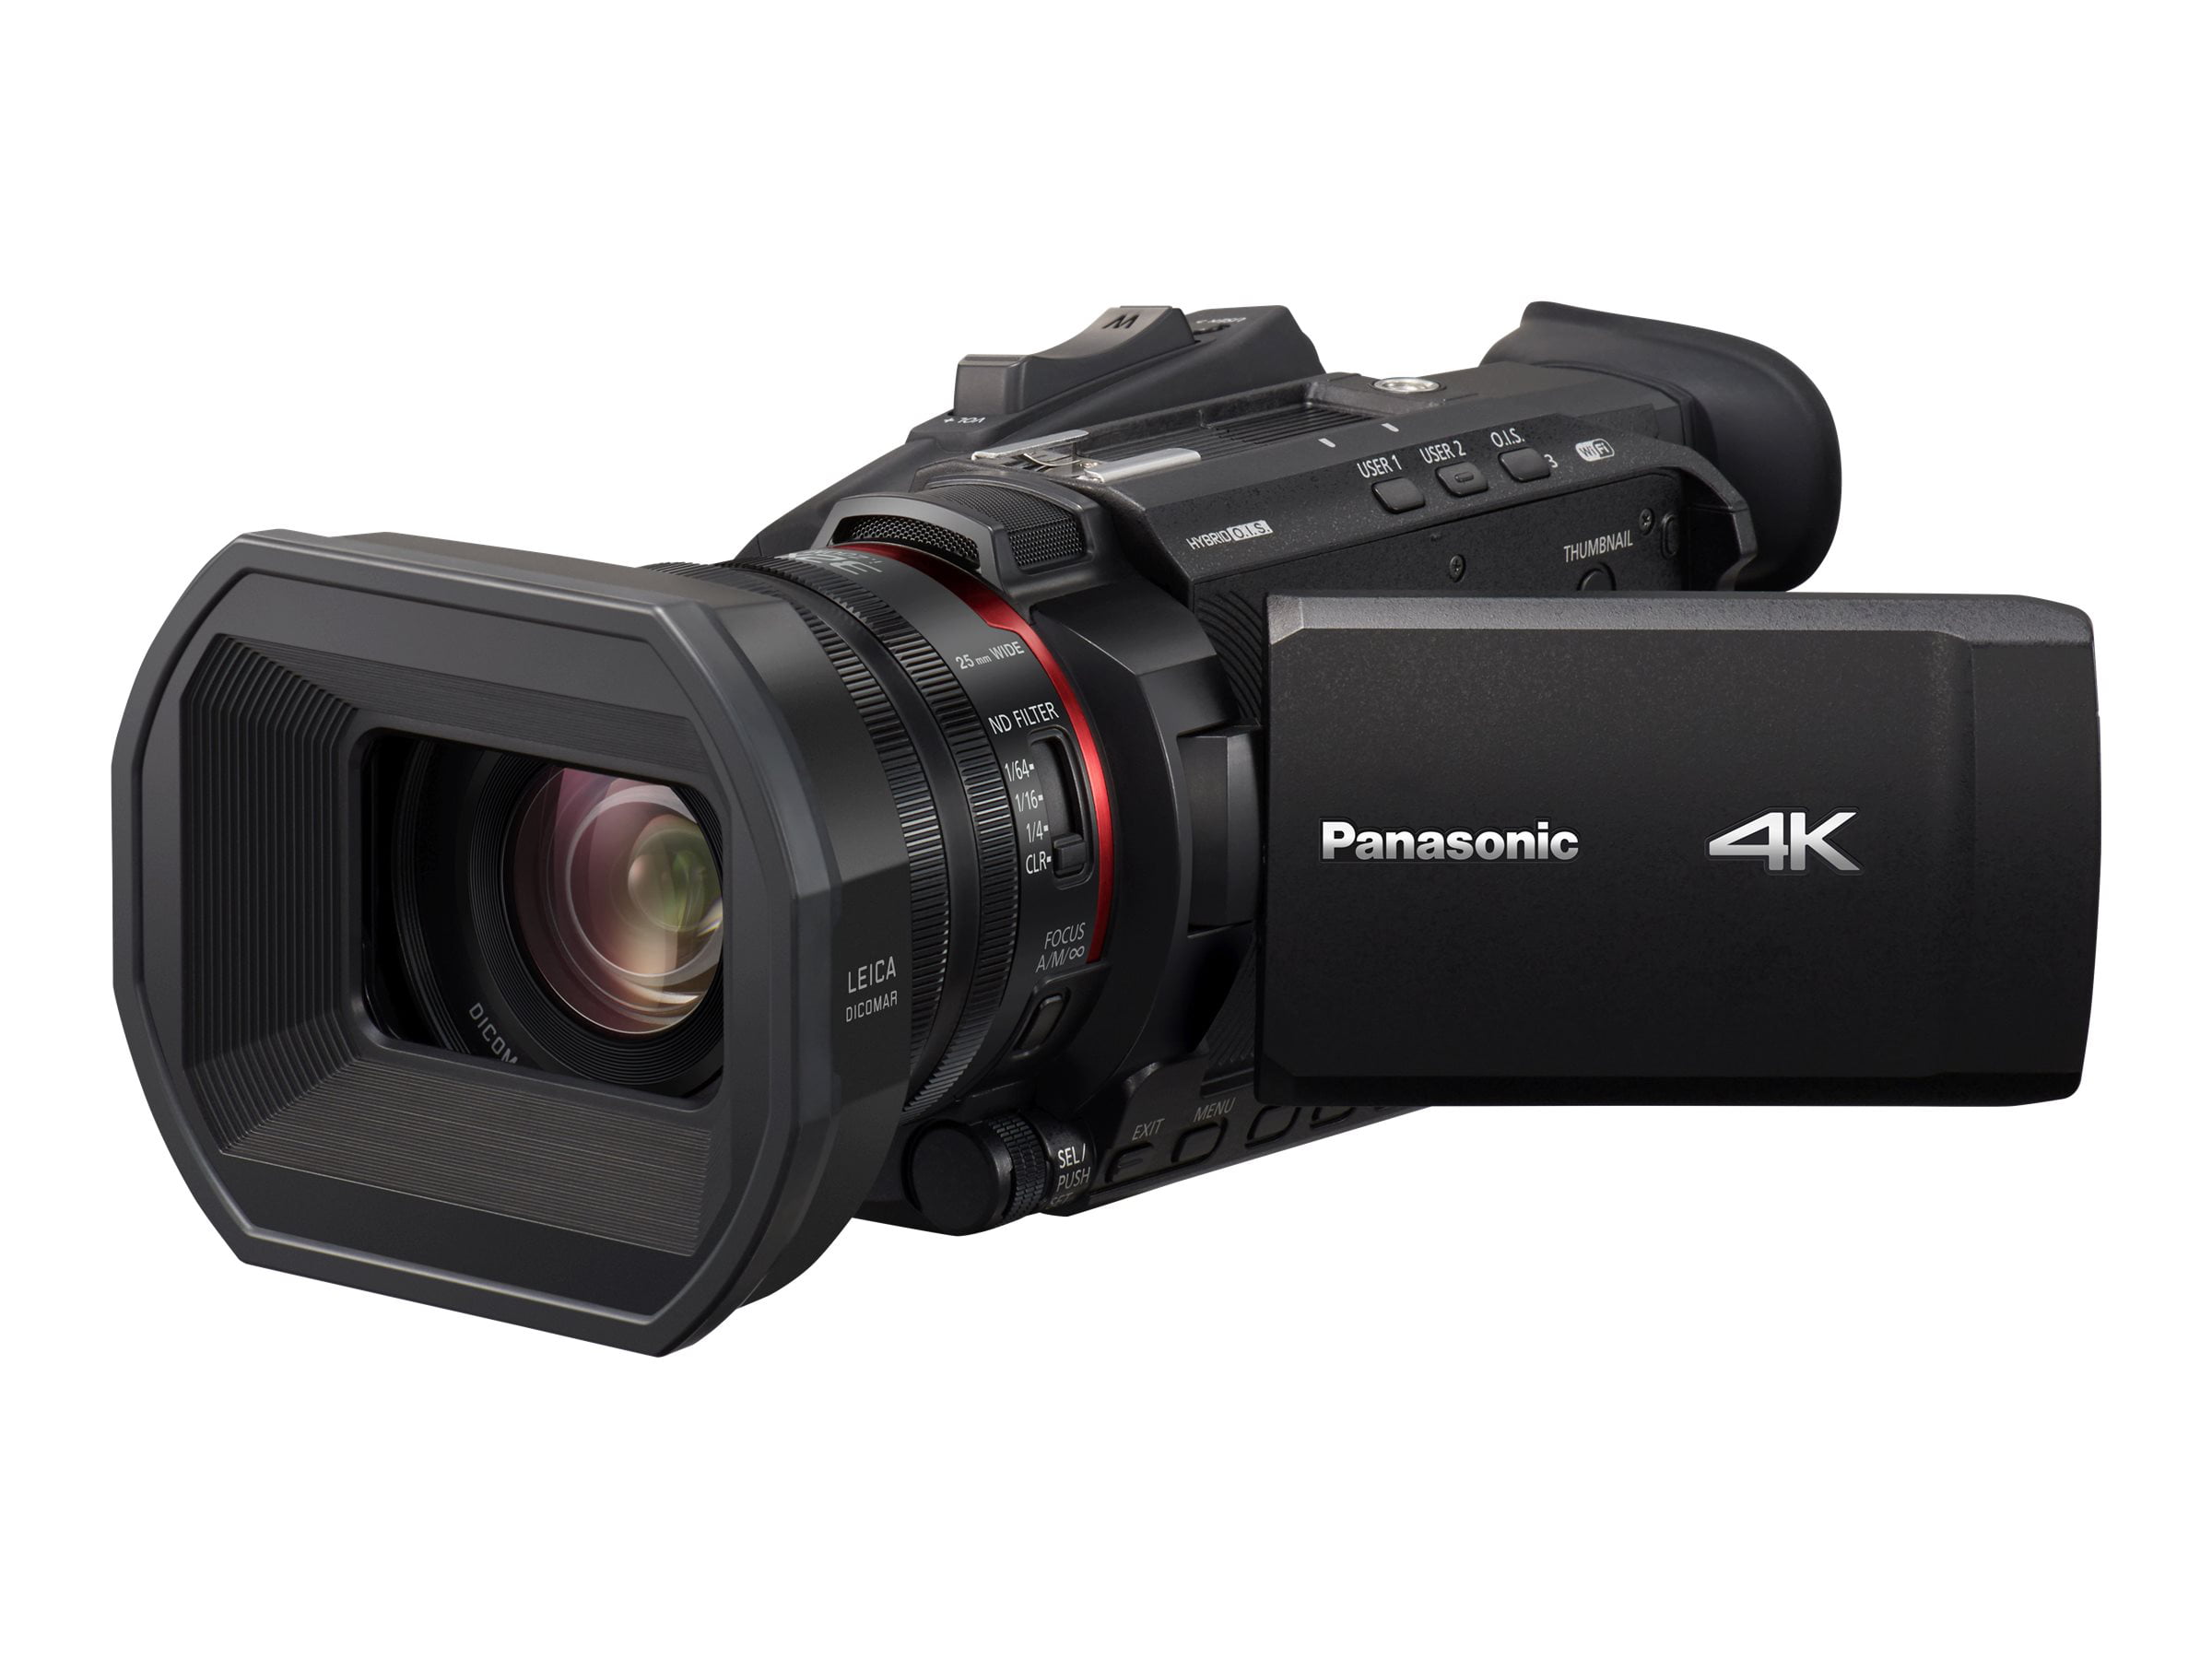 panasonic-x1500-4k-professional-camcorder-with-24x-optical-zoom-wifi